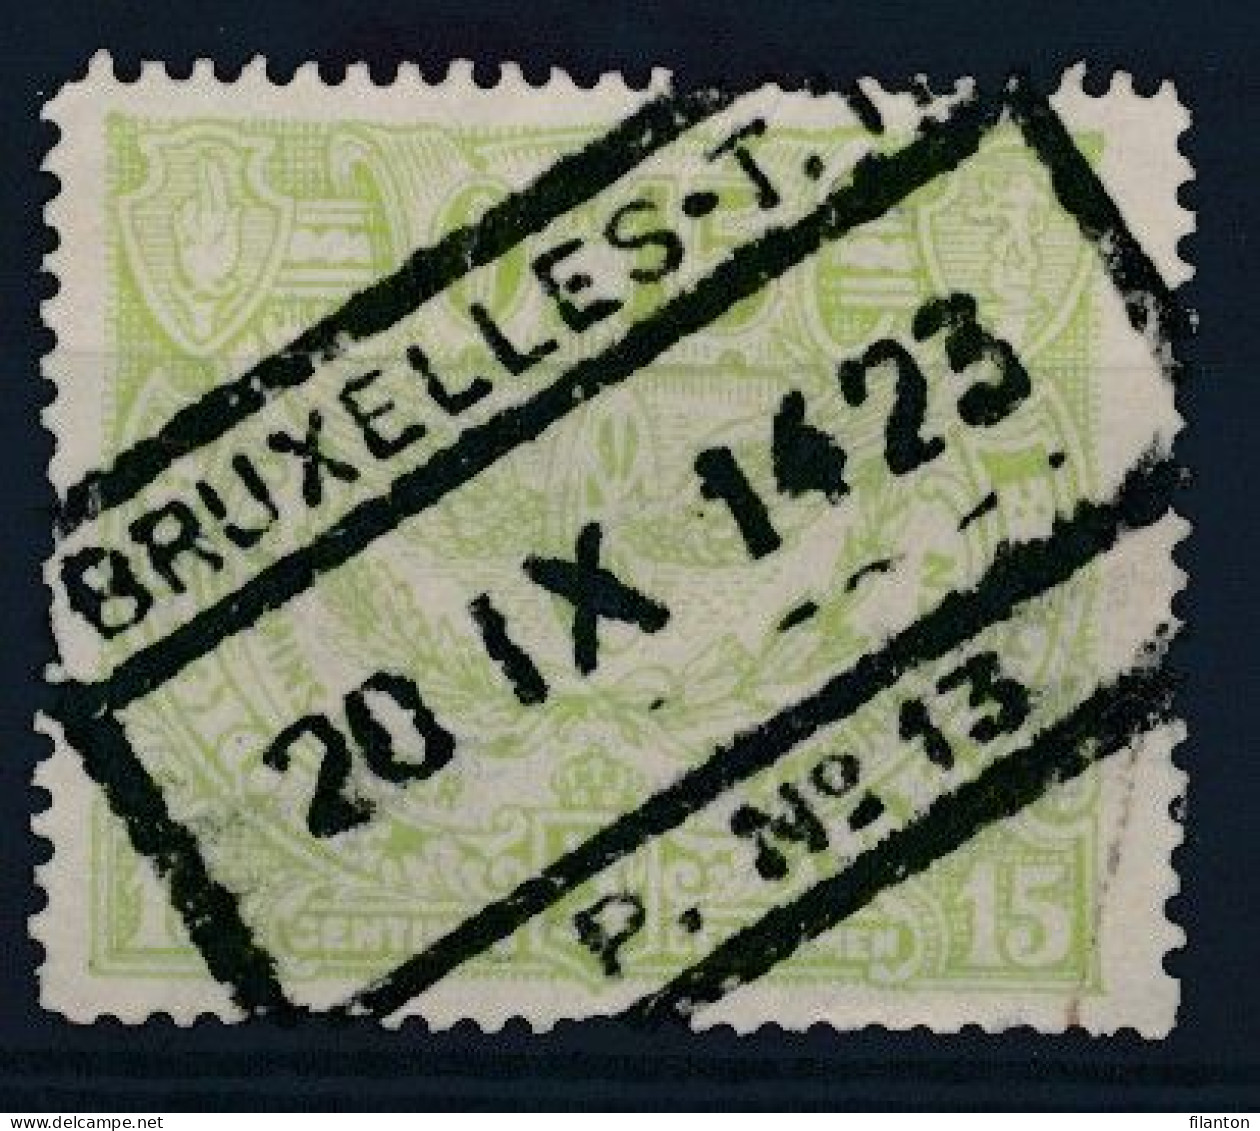 TR  101 -  "BRUXELLES-T.T. - P. Nr 13" - (ref. 37.438) - Usados